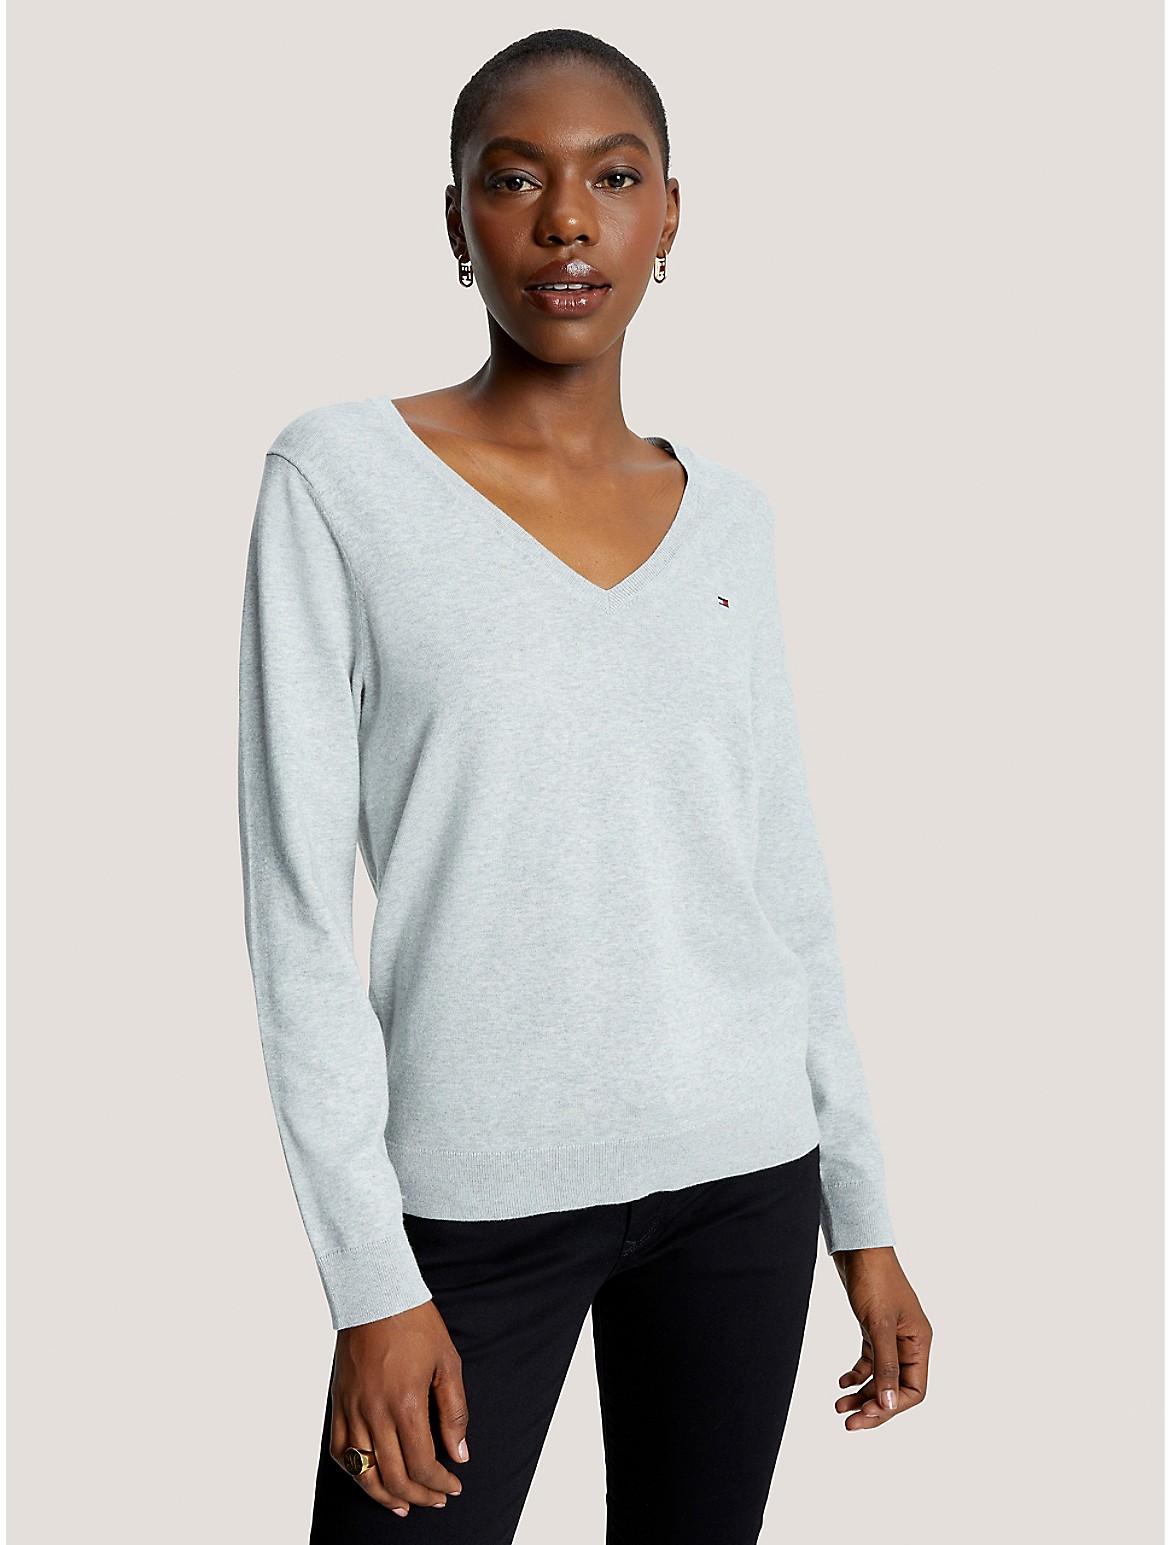 Tommy Hilfiger Women's Solid V-Neck Sweater